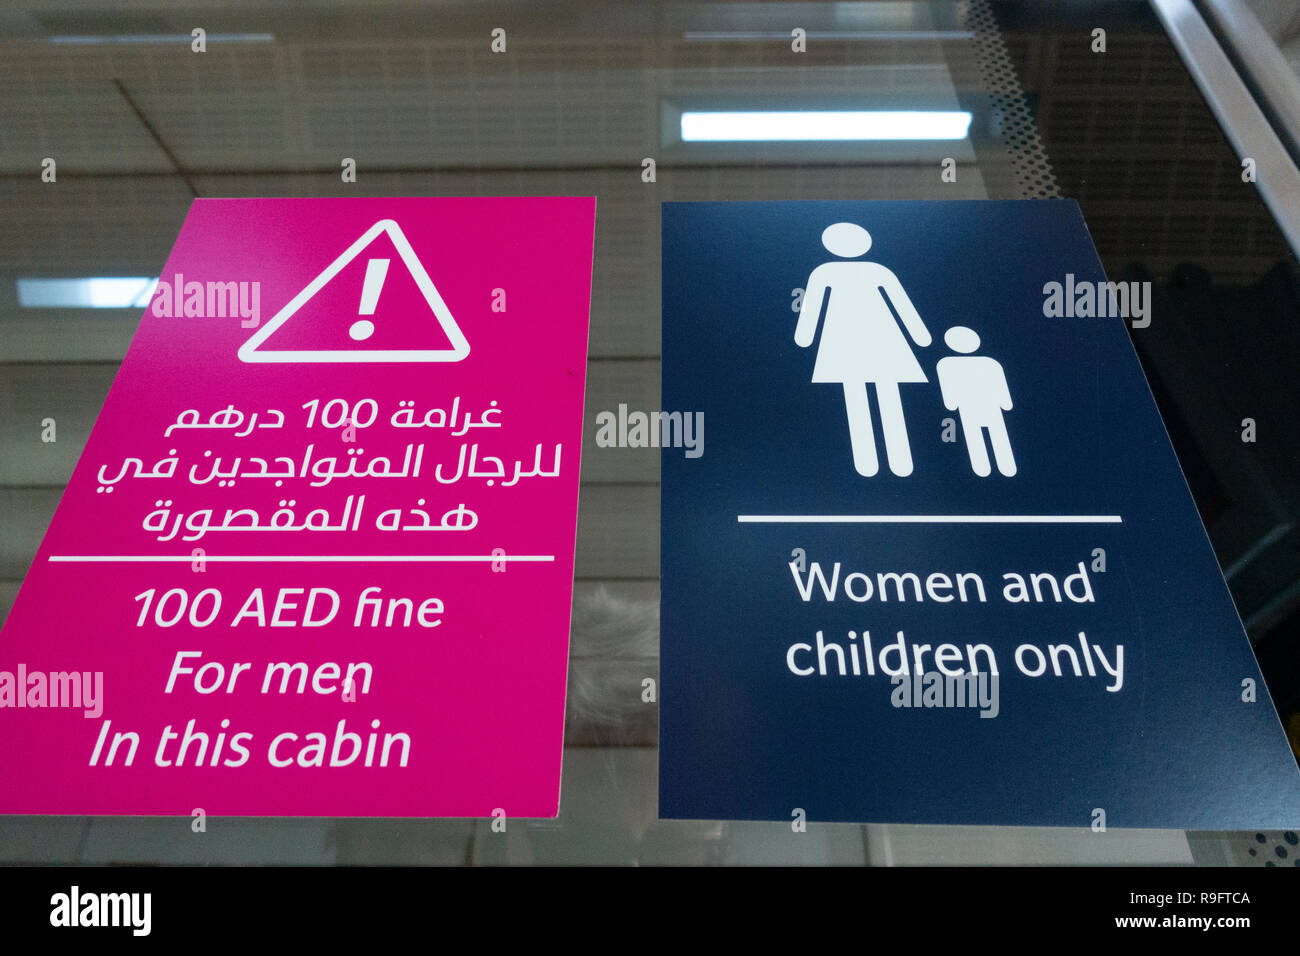 Women only carriage entrance at platform on Dubai metro, United Arab Emirates Stock Photo